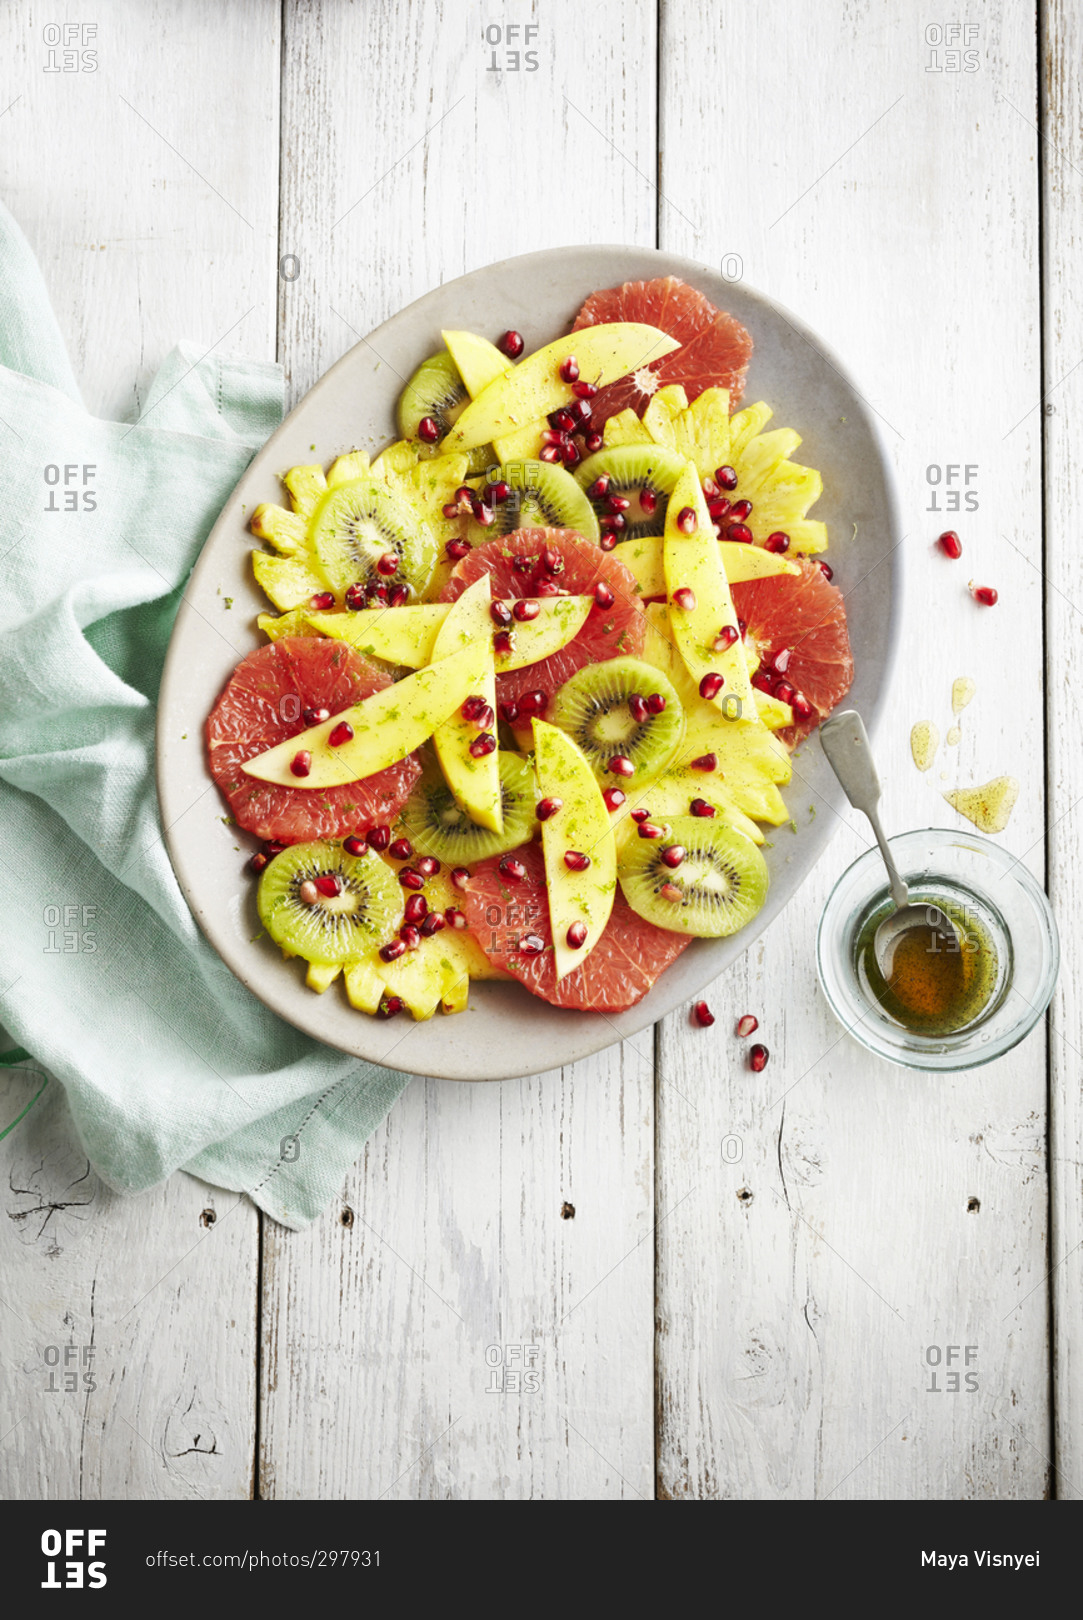 Fruit salad with grapefruit, pineapple and kiwi